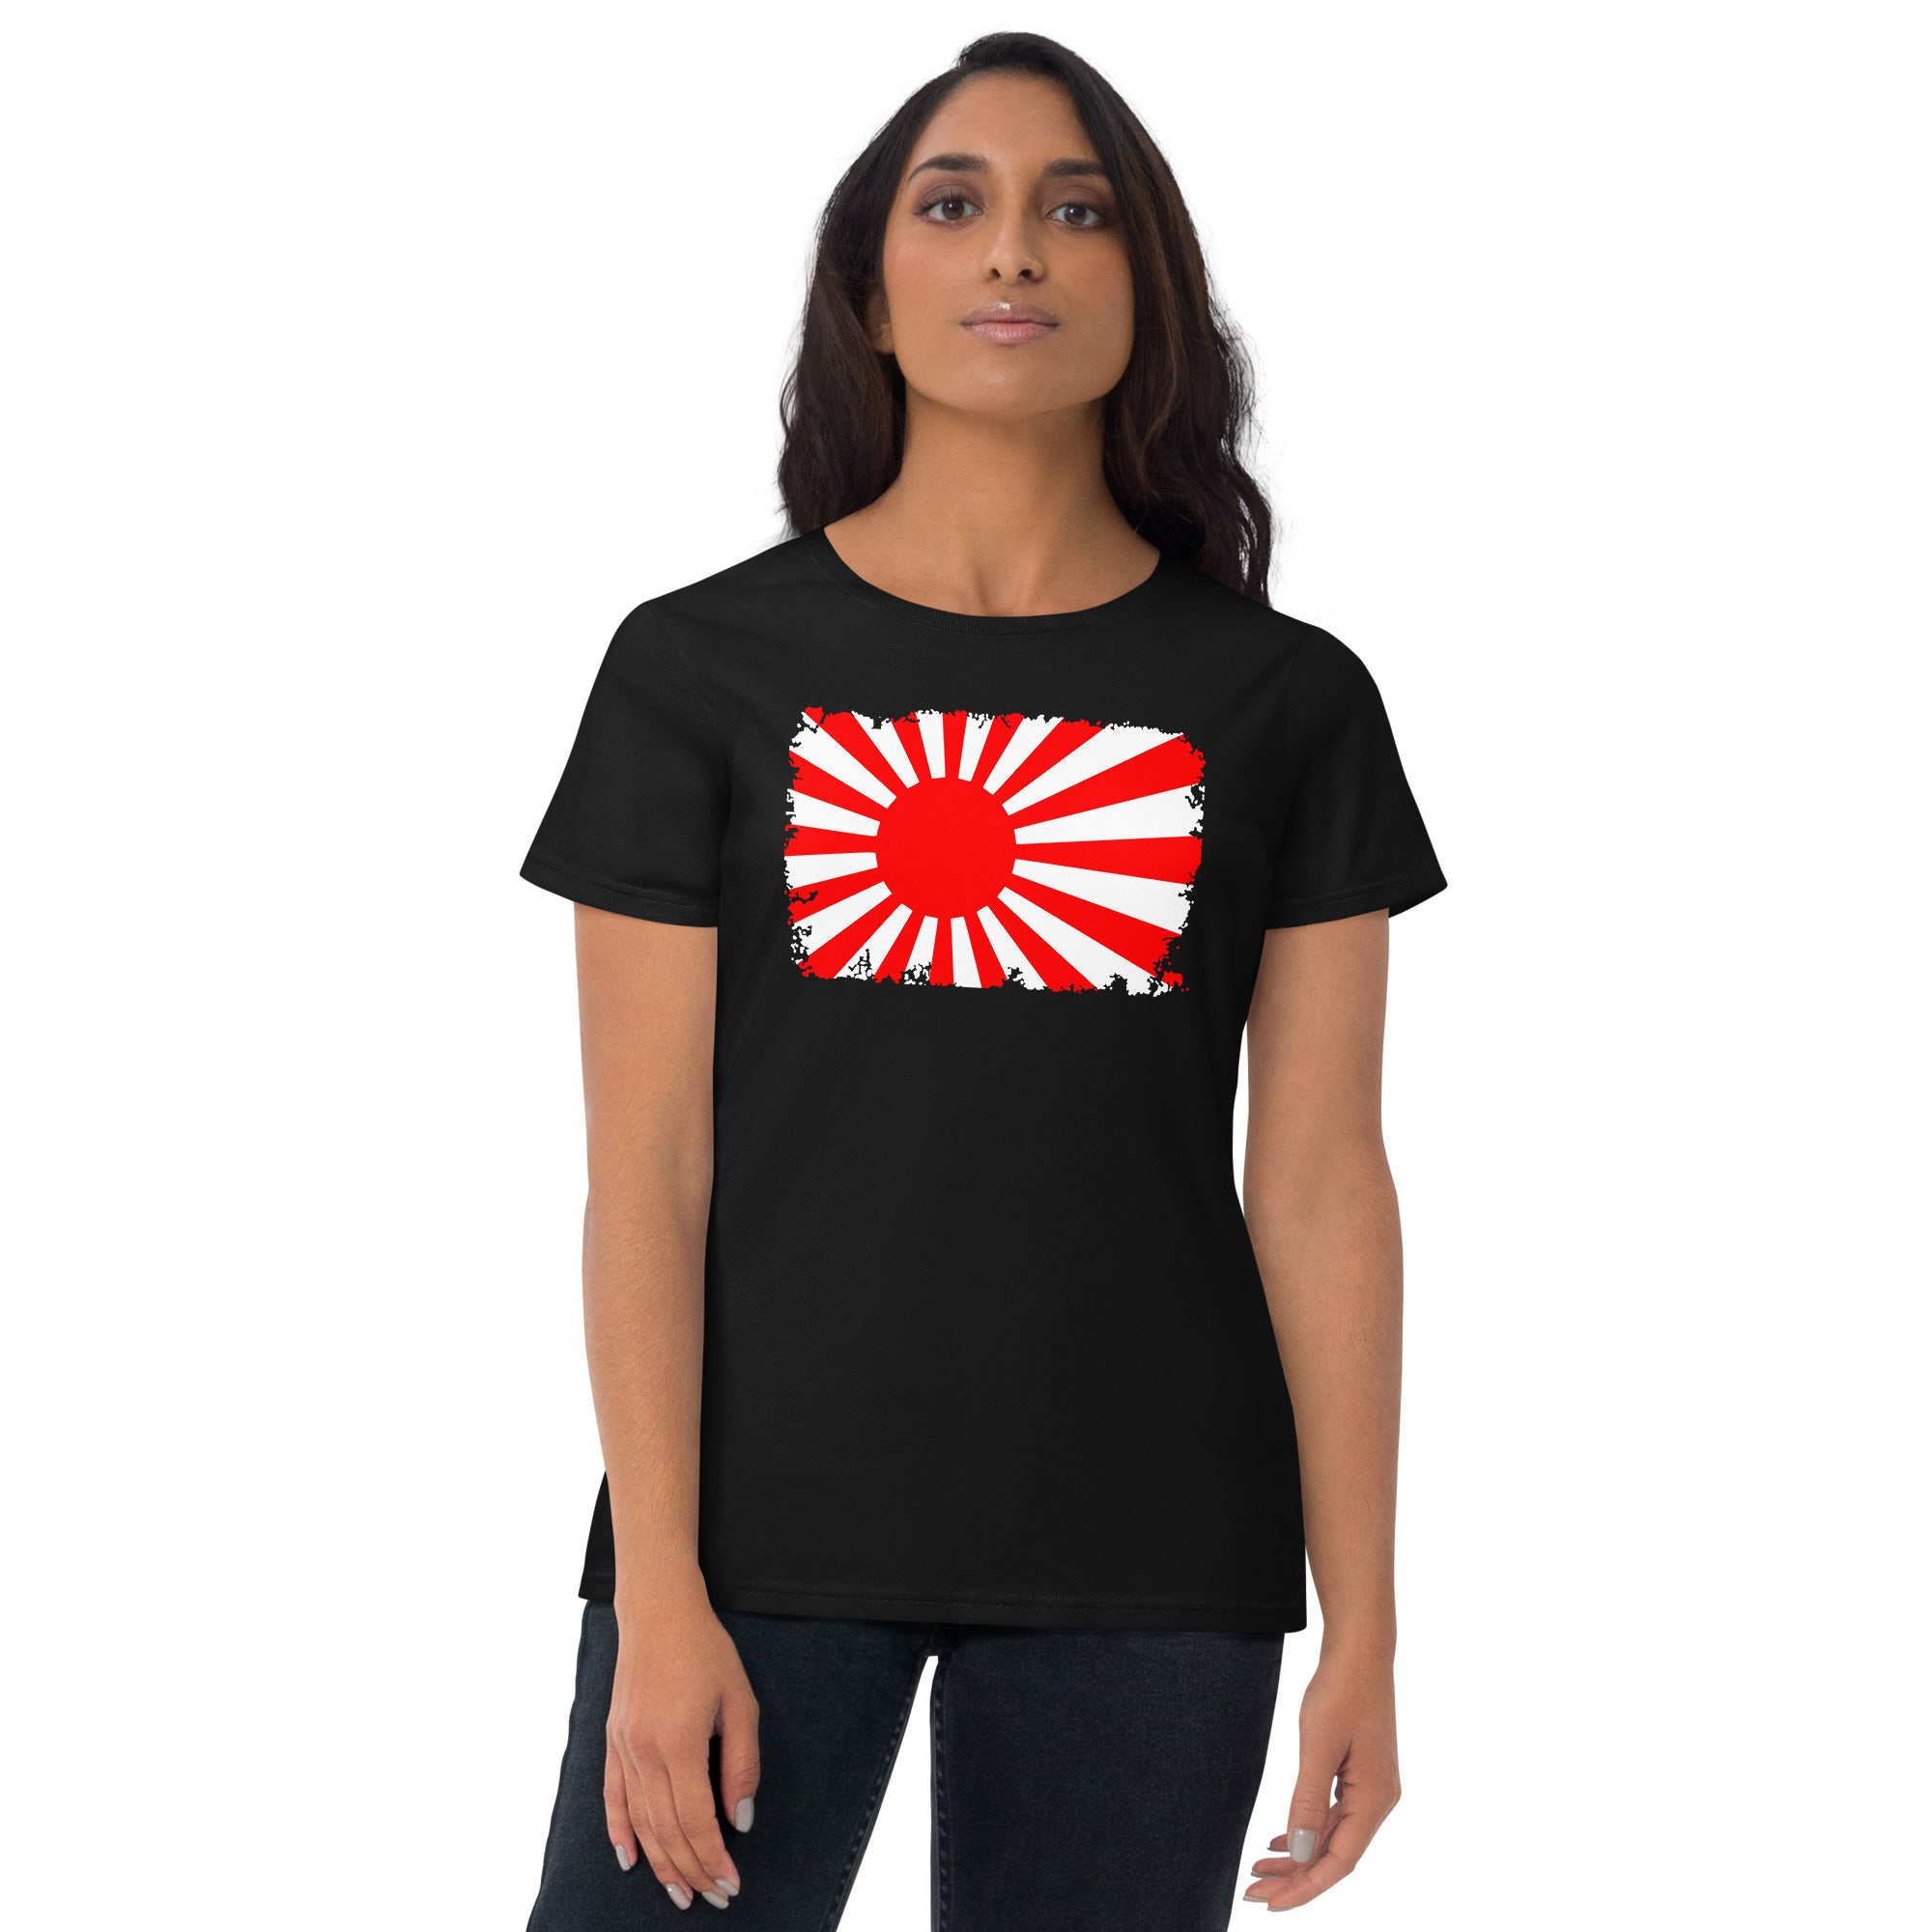 The National Flag of Japan Land of the Rising Sun Women's Short Sleeve Babydoll T-shirt